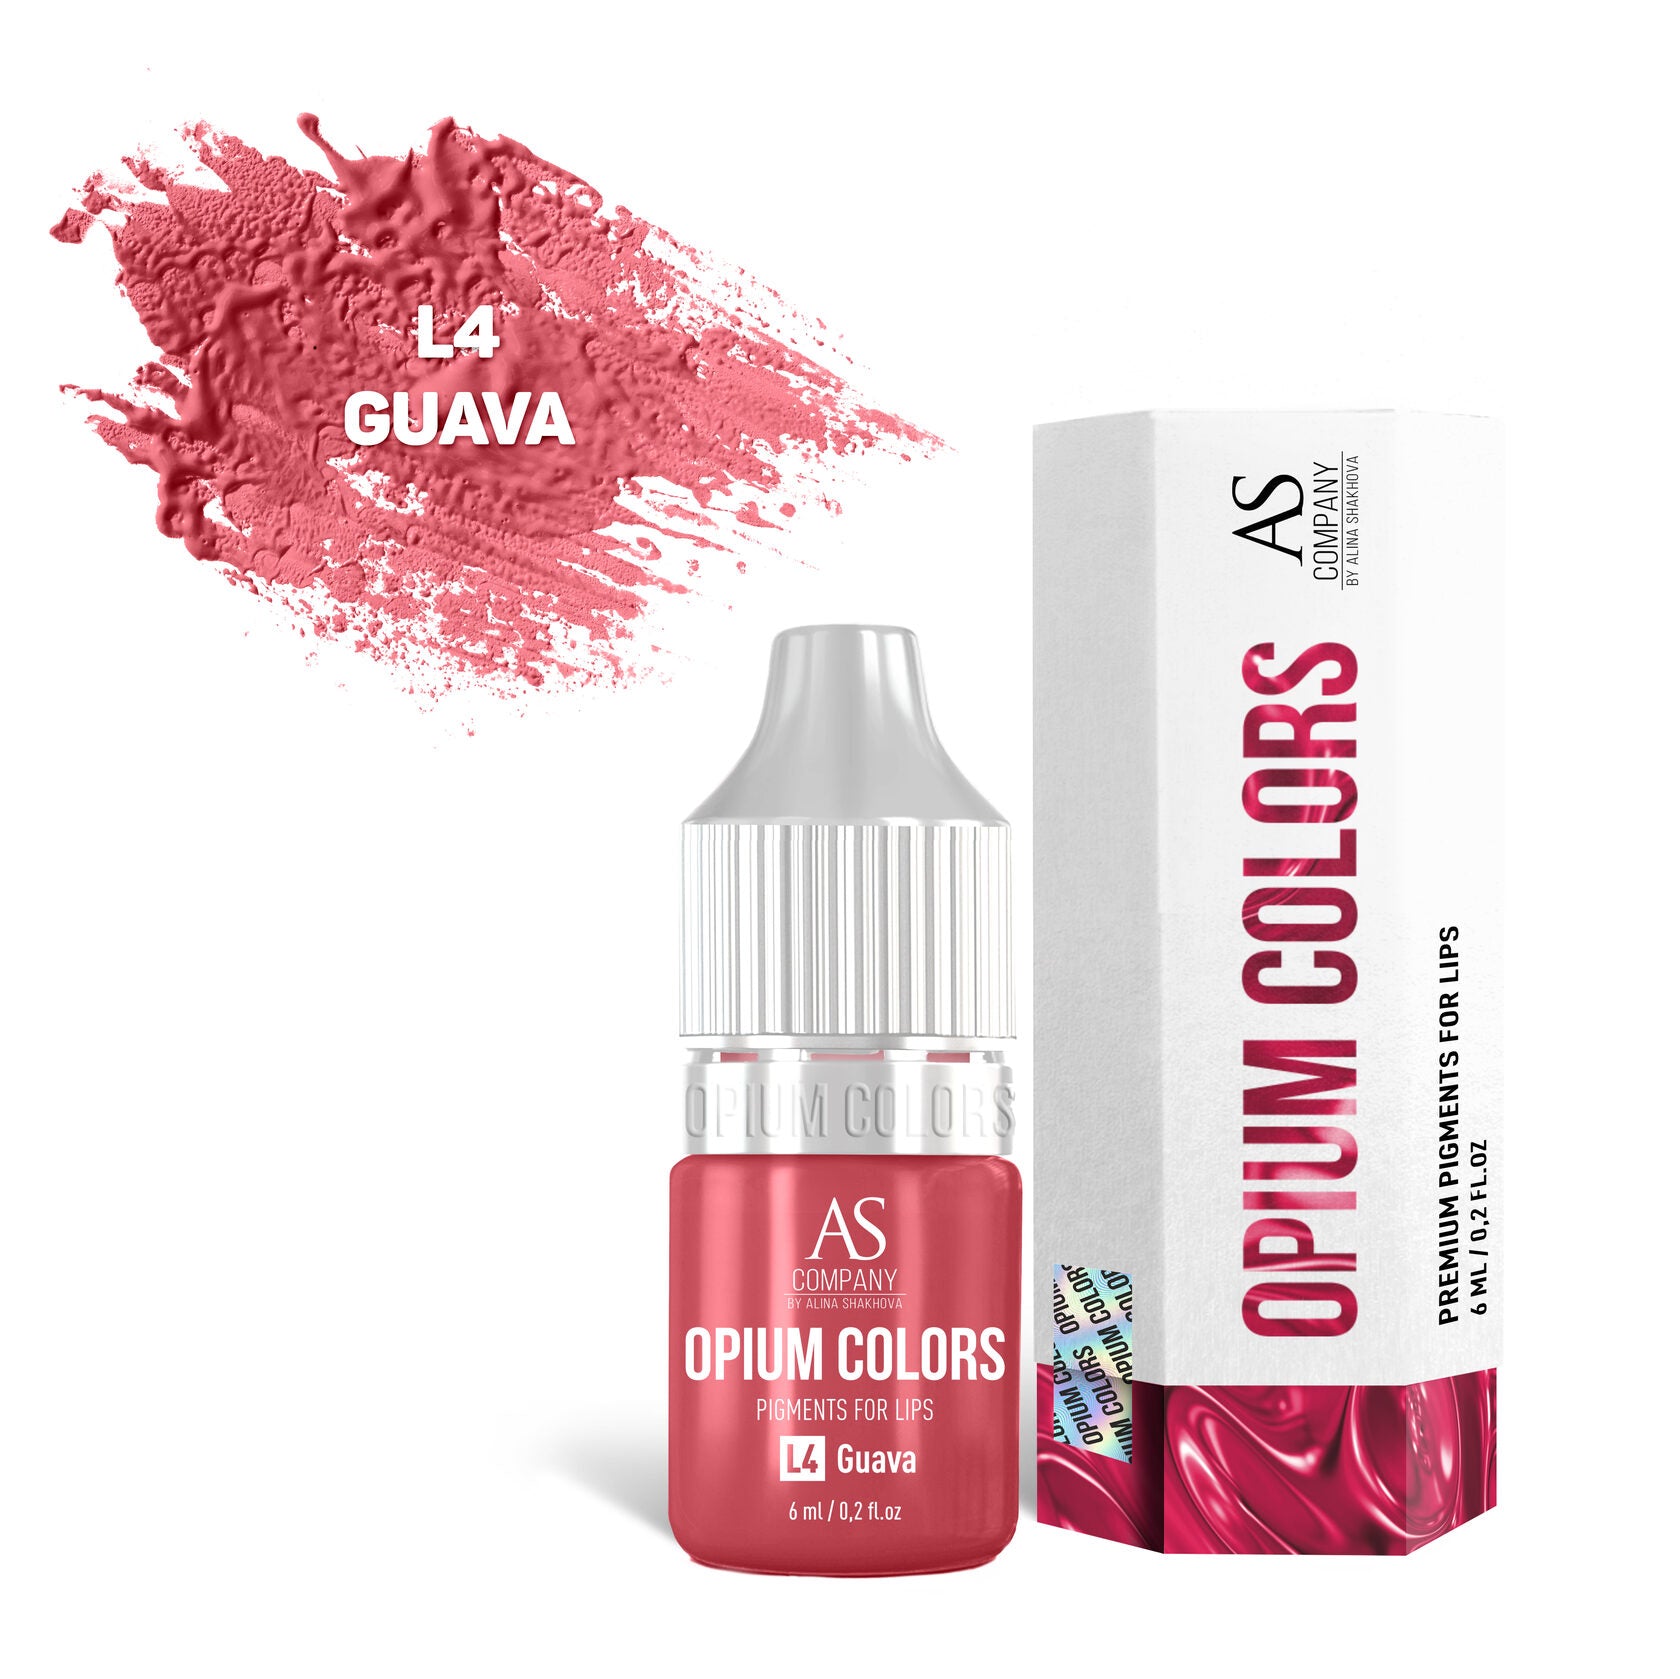 L4-GUAVA lip pigment OPIUM COLORS